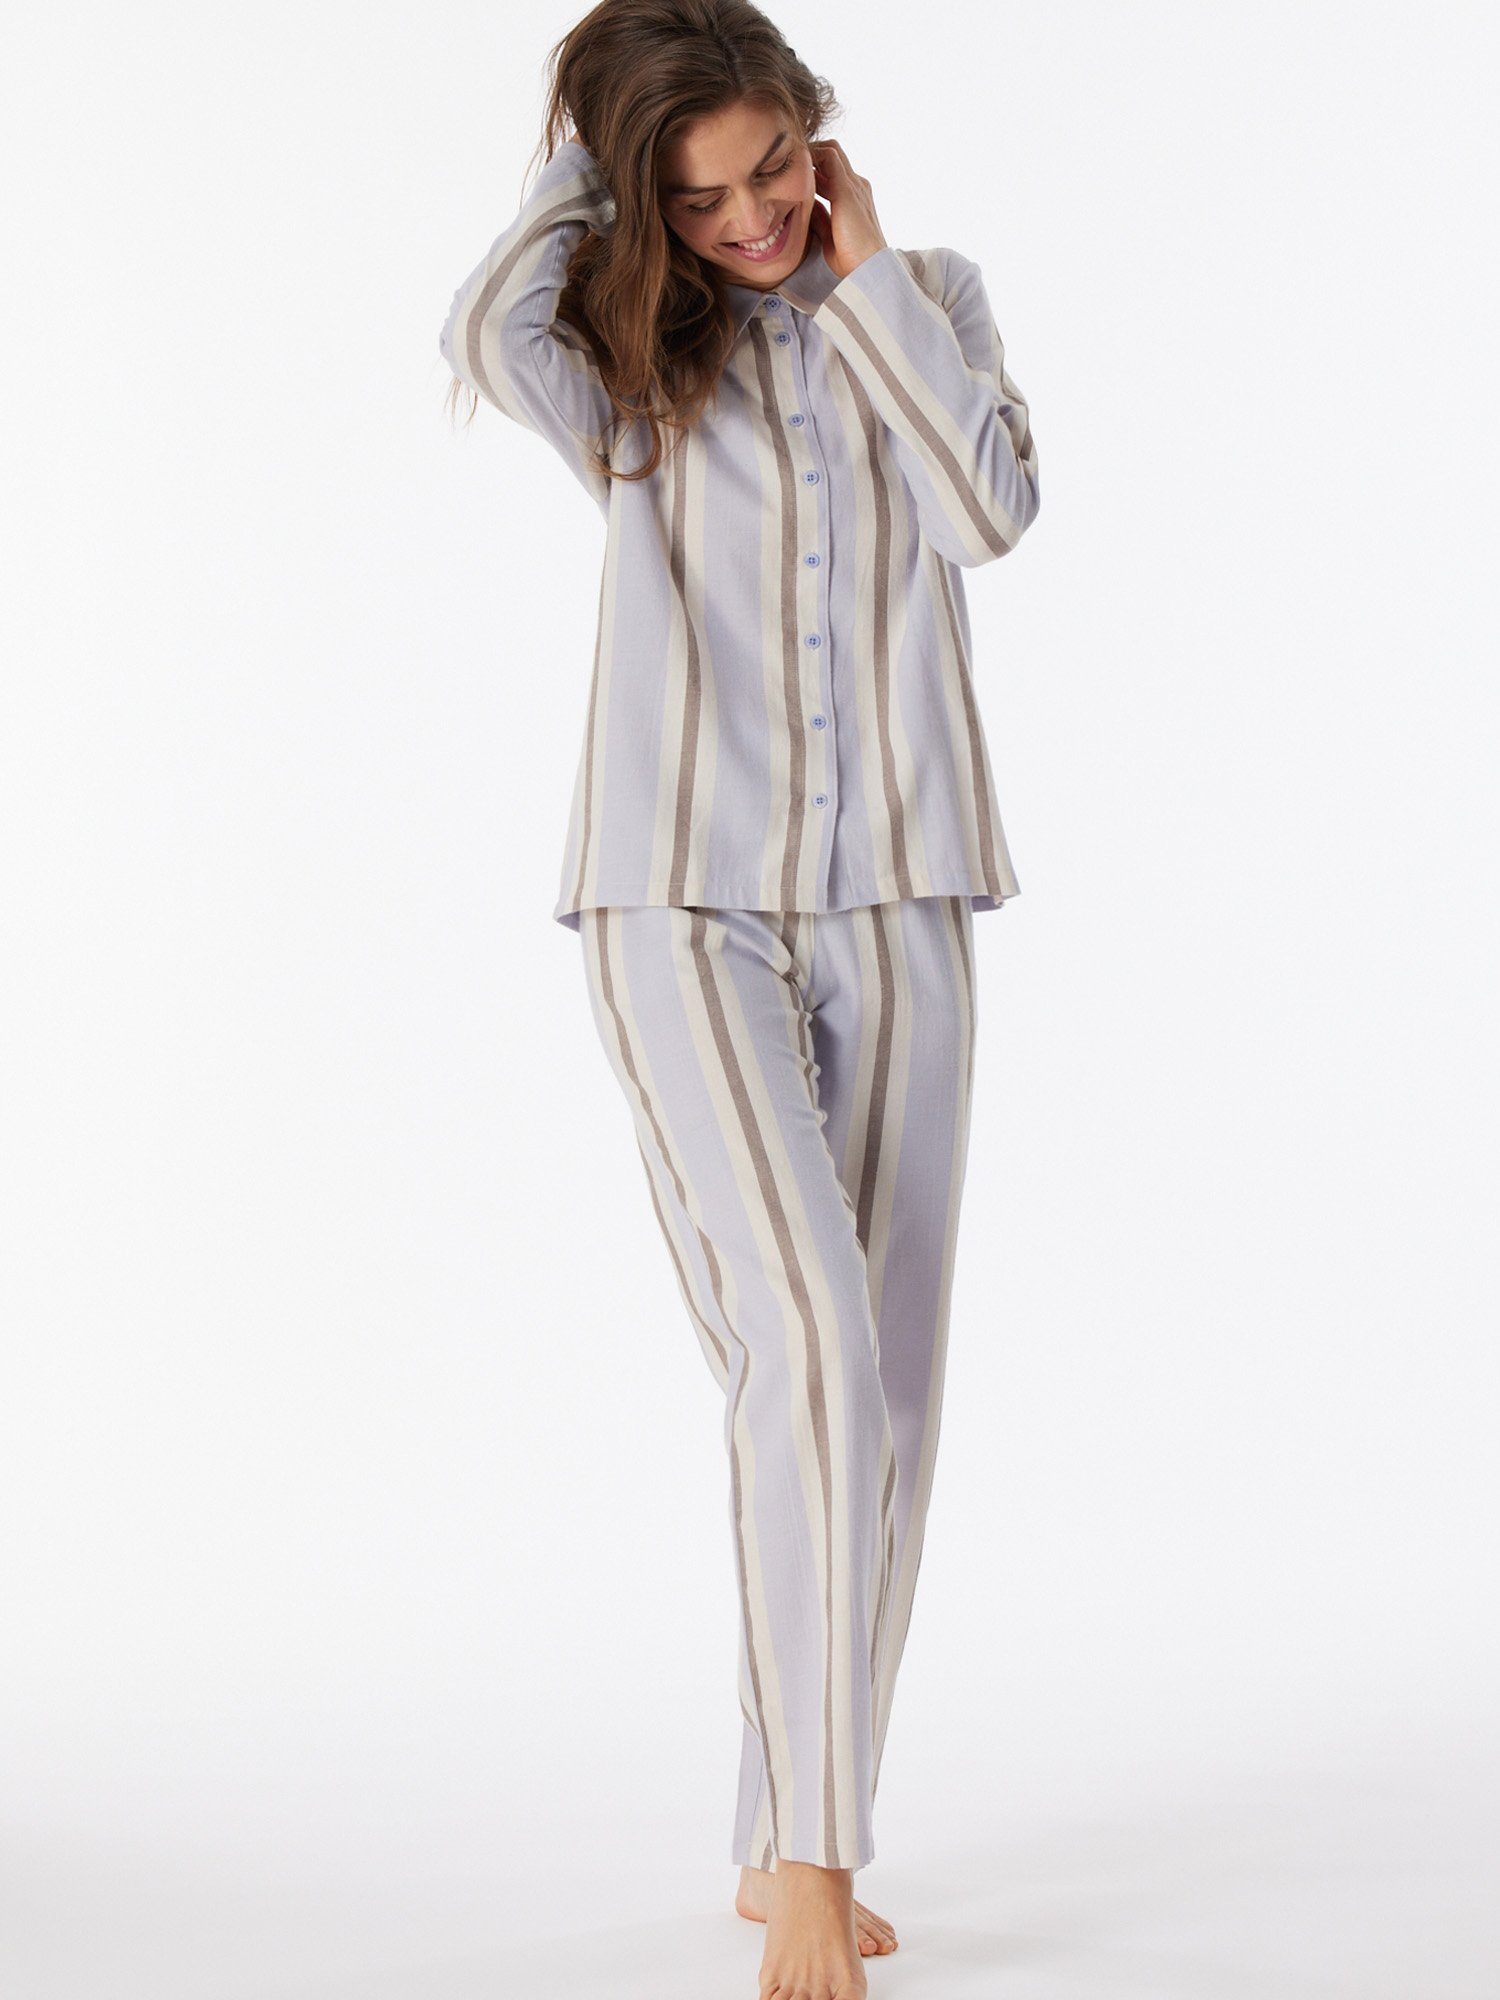 flieder schlafmode Pyjama schlafanzug Selected pyjama Premium Schiesser